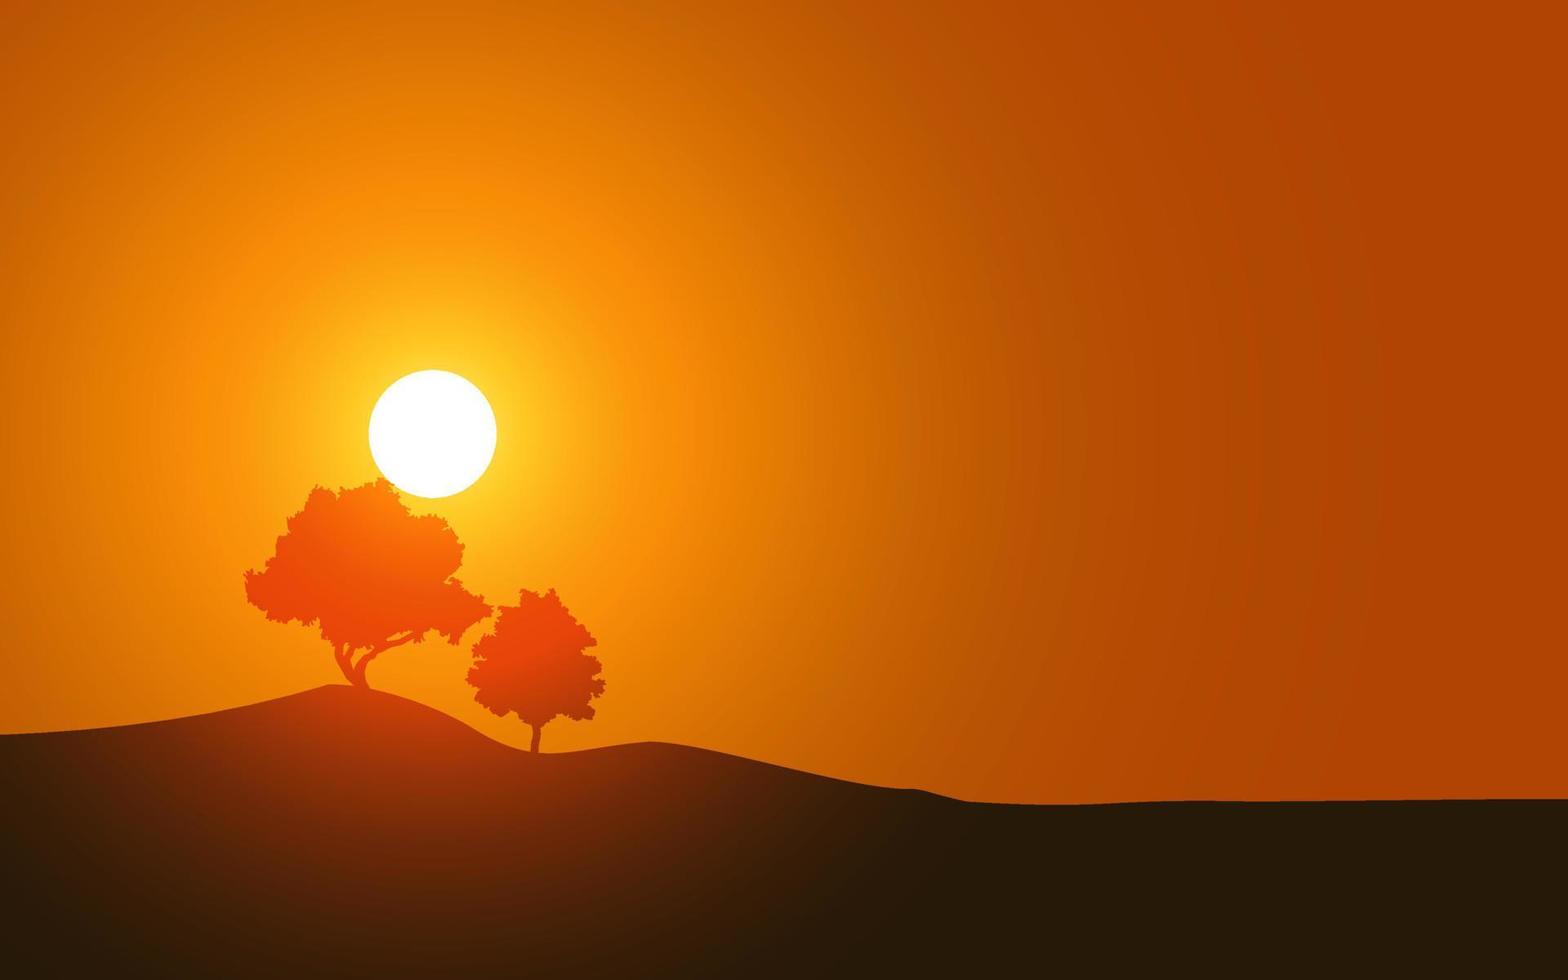 Bäume Silhouette am orangefarbenen Himmel Sonnenuntergang vektor